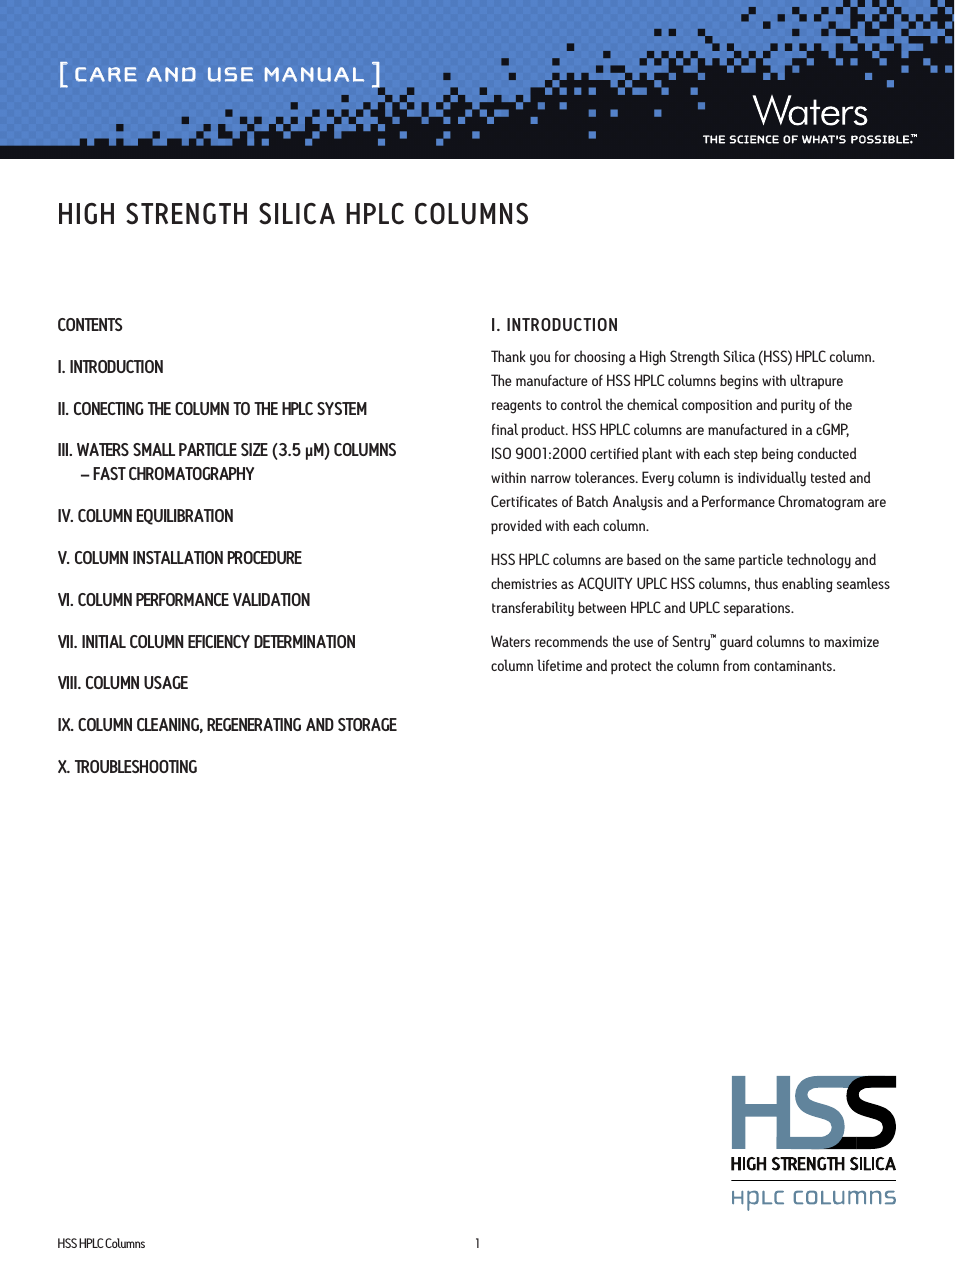 High Strength Silica Columns